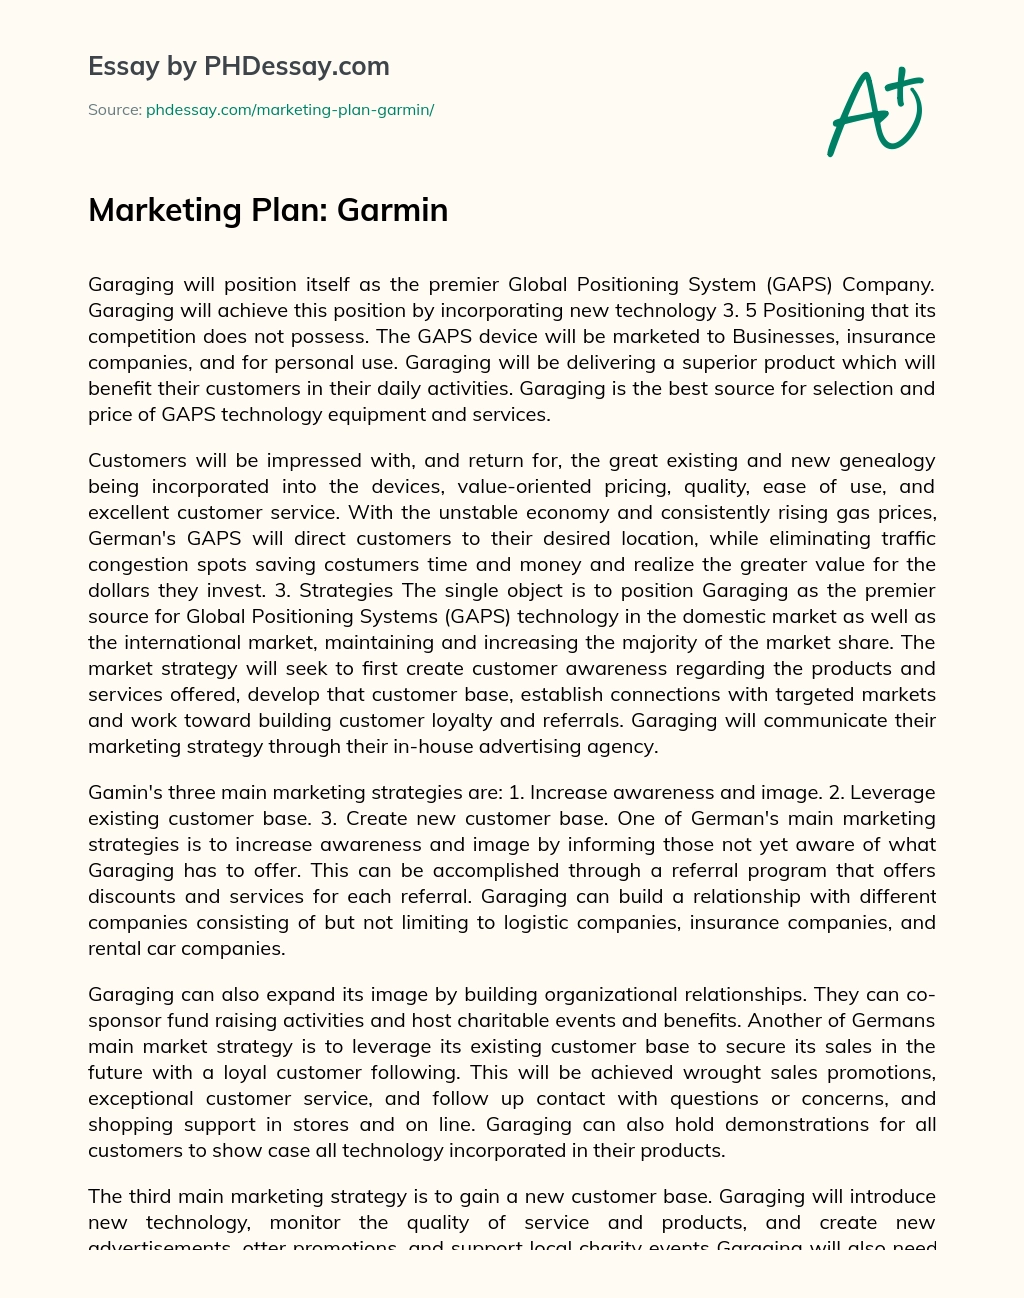 Marketing Plan: Garmin essay